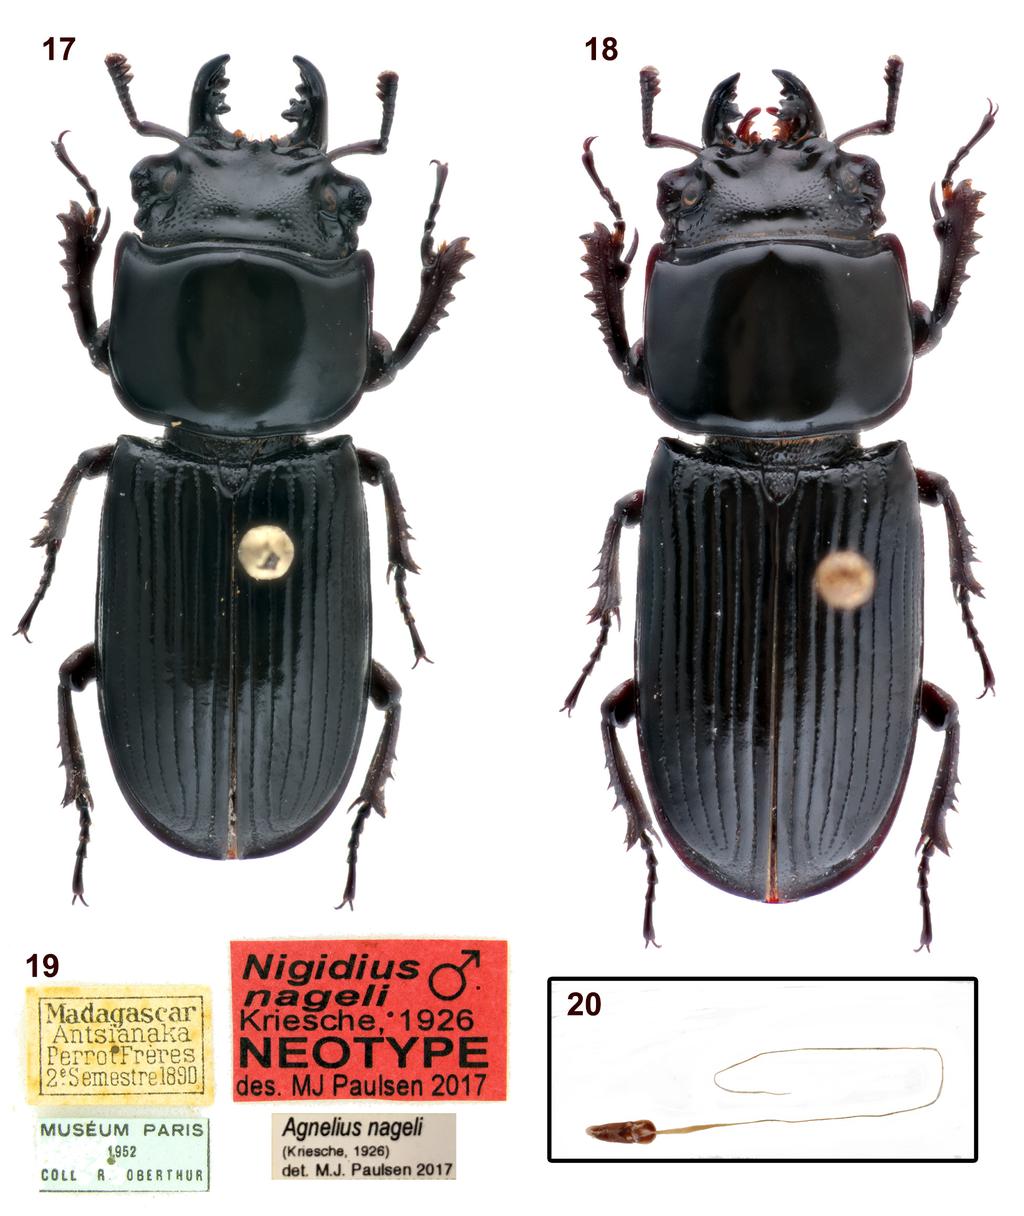 12 Insecta Mundi 0592, December 2017 Paulsen Figures 17 20. Agnelius nageli (Kriesche, 1926).